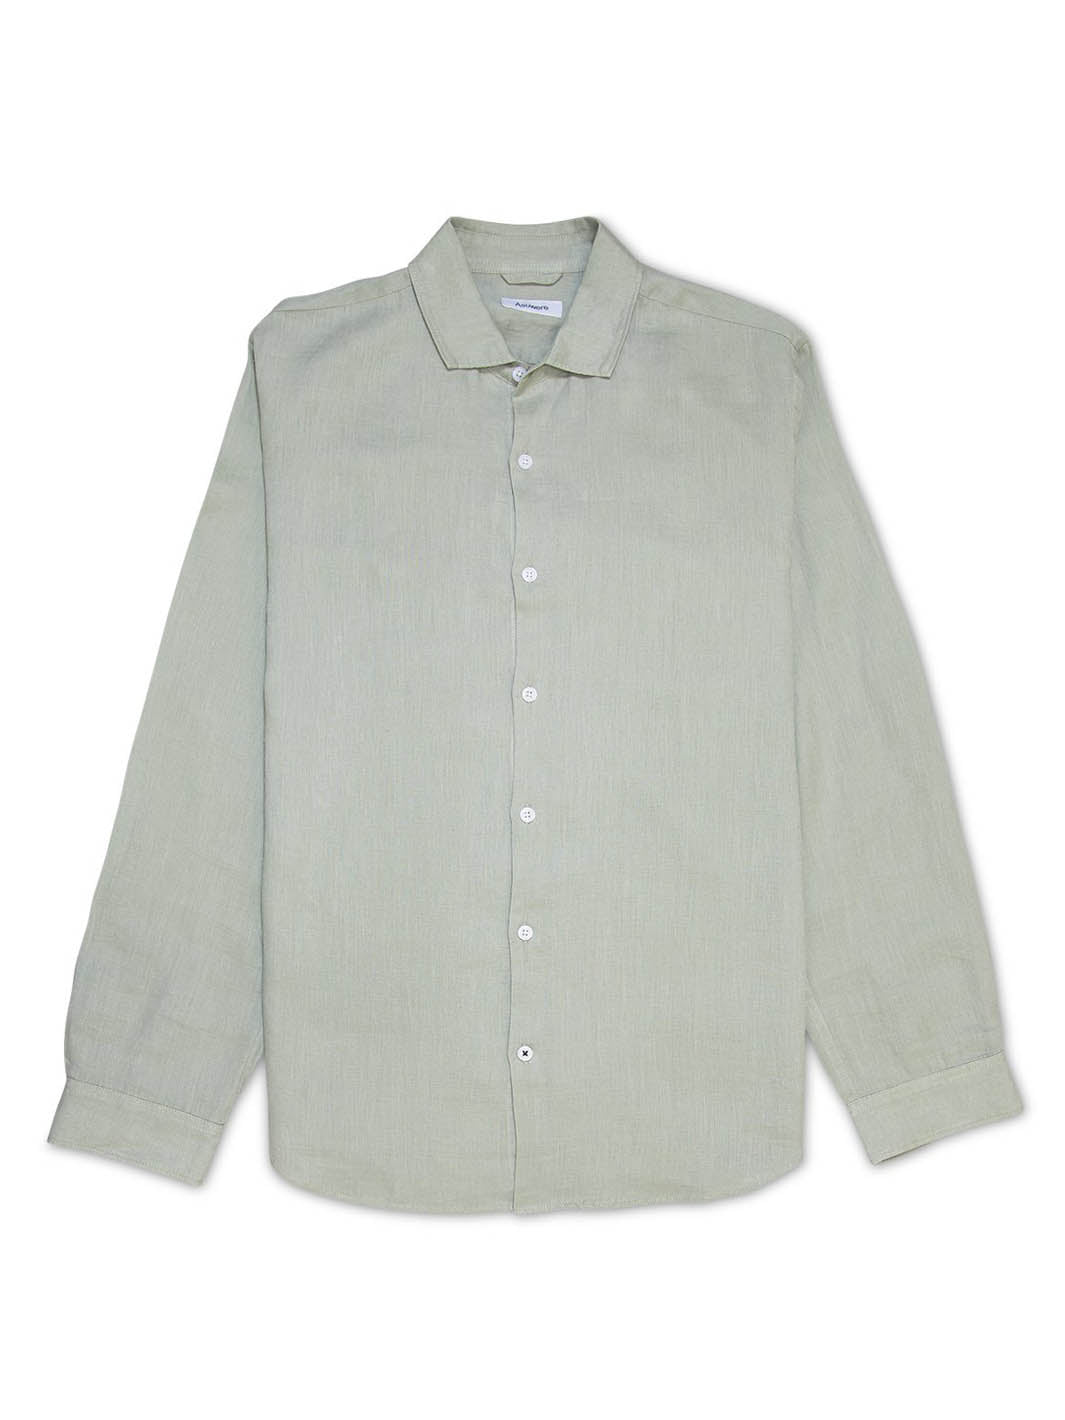 Essential Linen Shirt - Sage